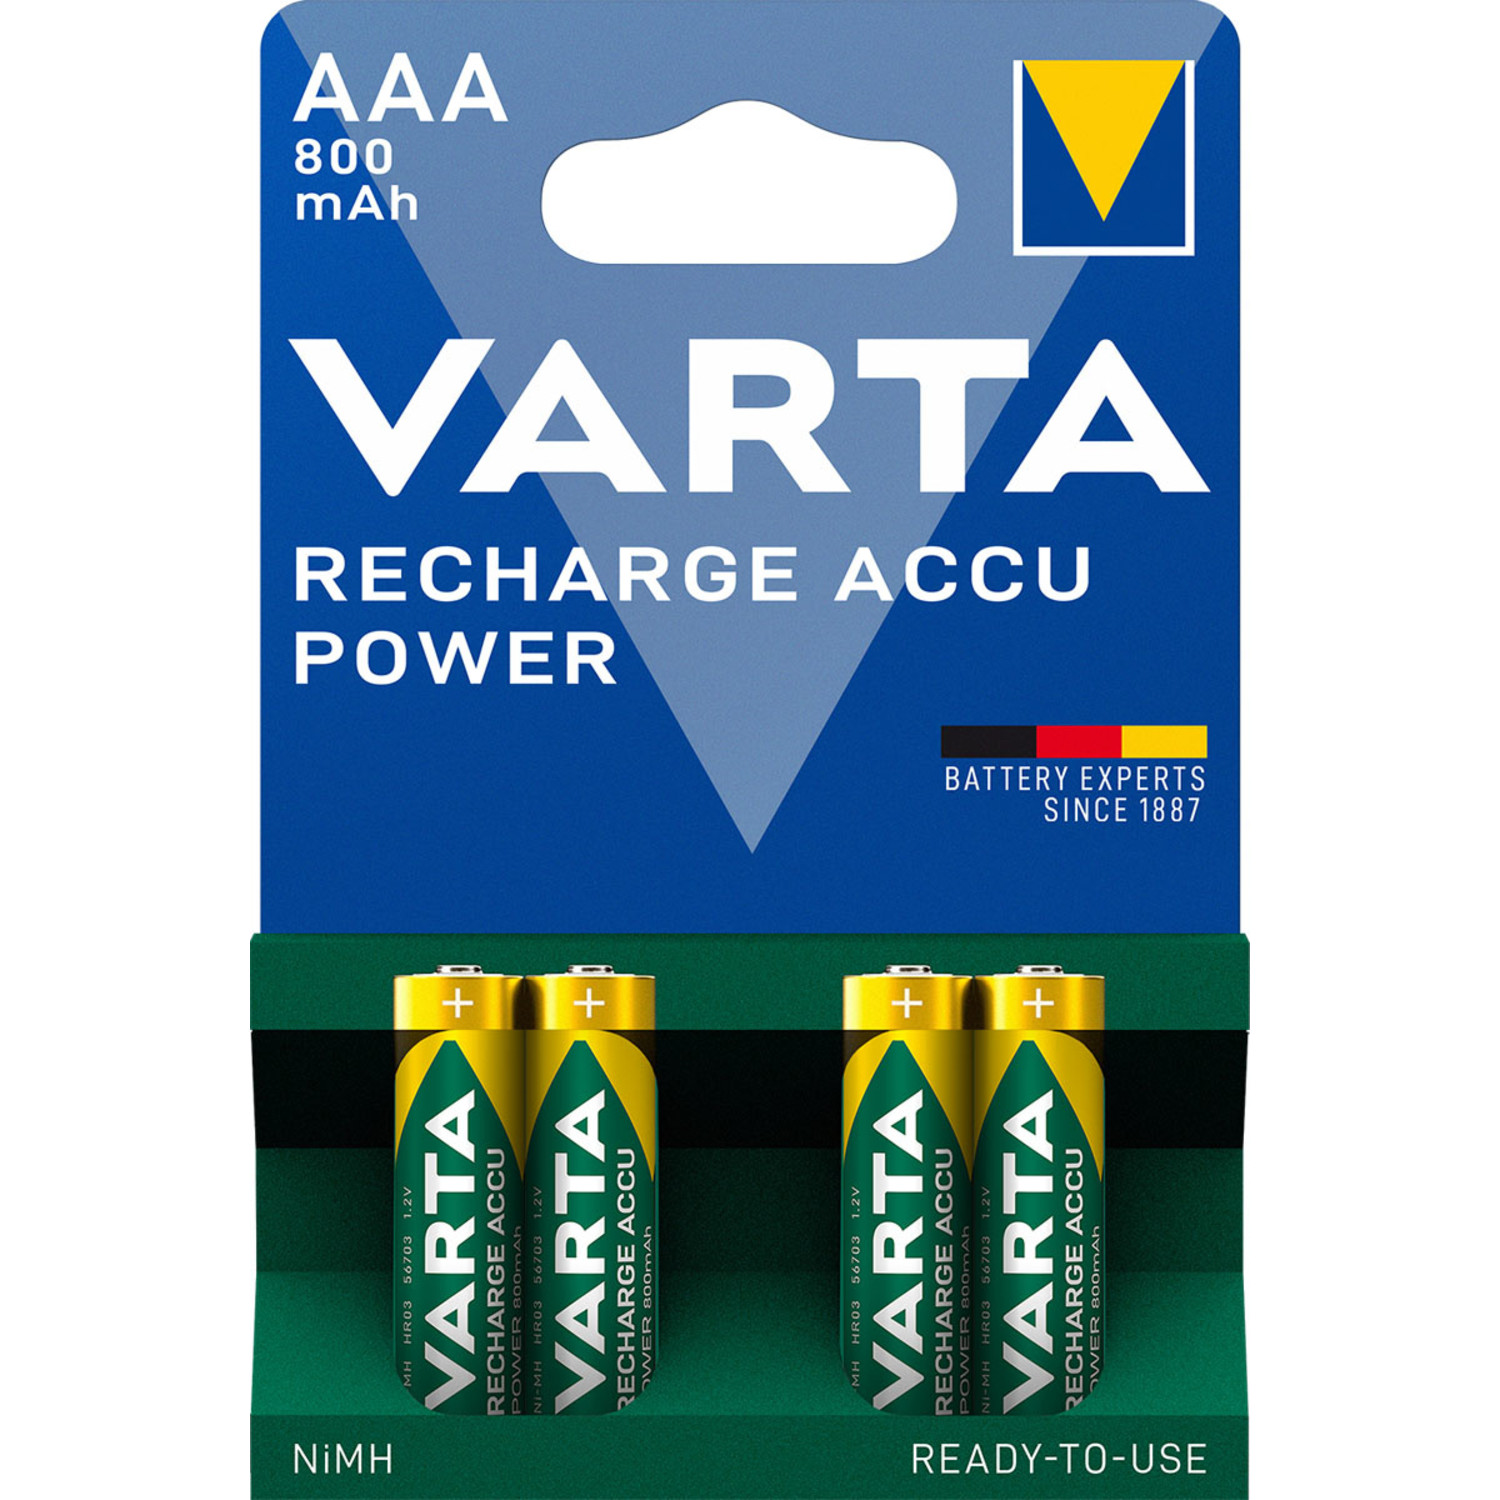 spiegel Grand oppervlakkig Varta AAA - oplaadbare batterijen 800mAh 4 stuks - Beterbatterij